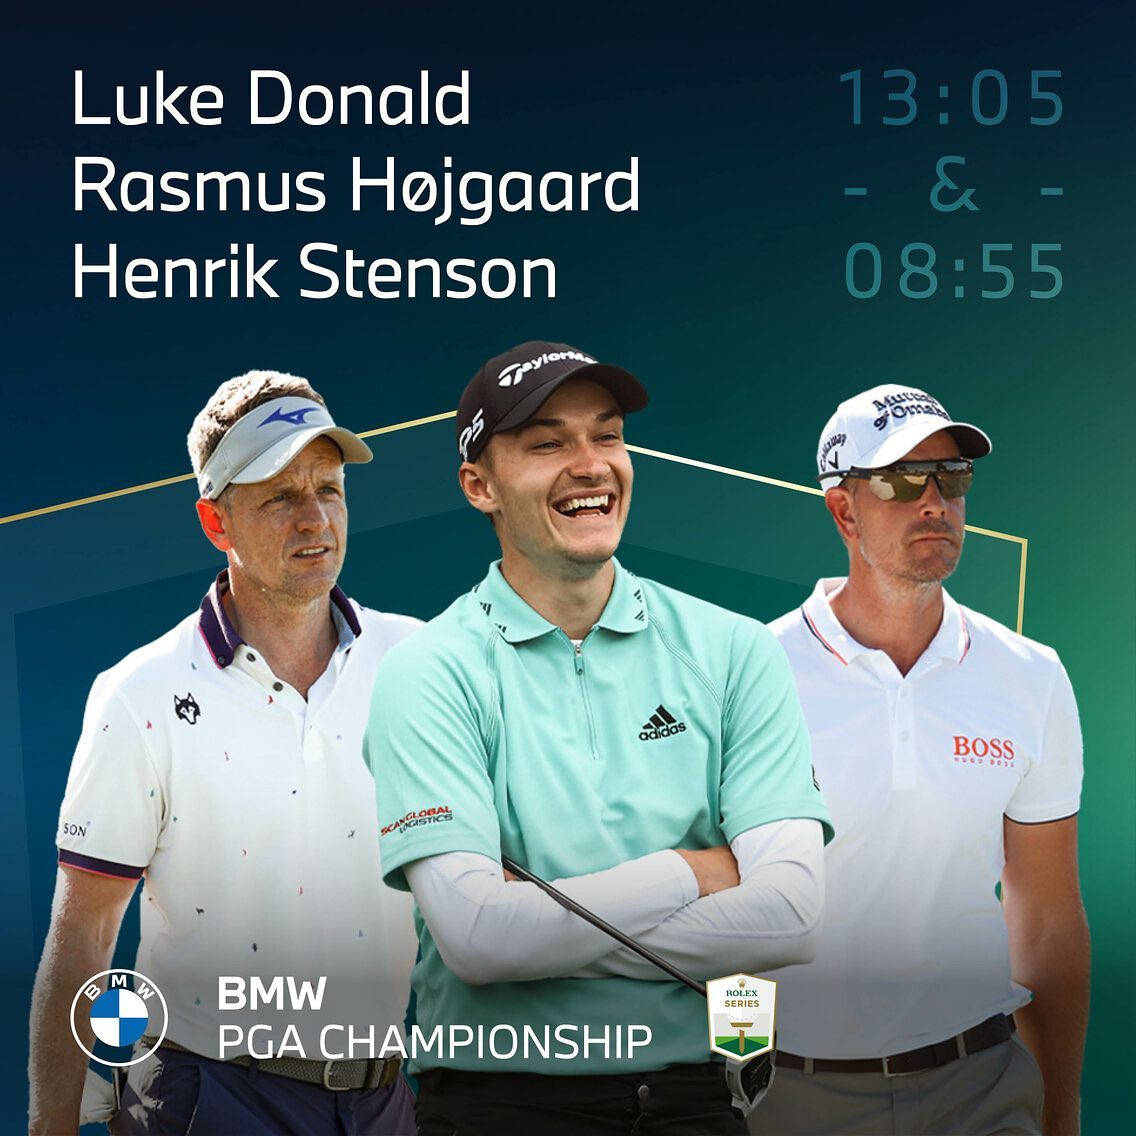 Luke Donald In PGA CHAMPIONSHIP Wallpaper